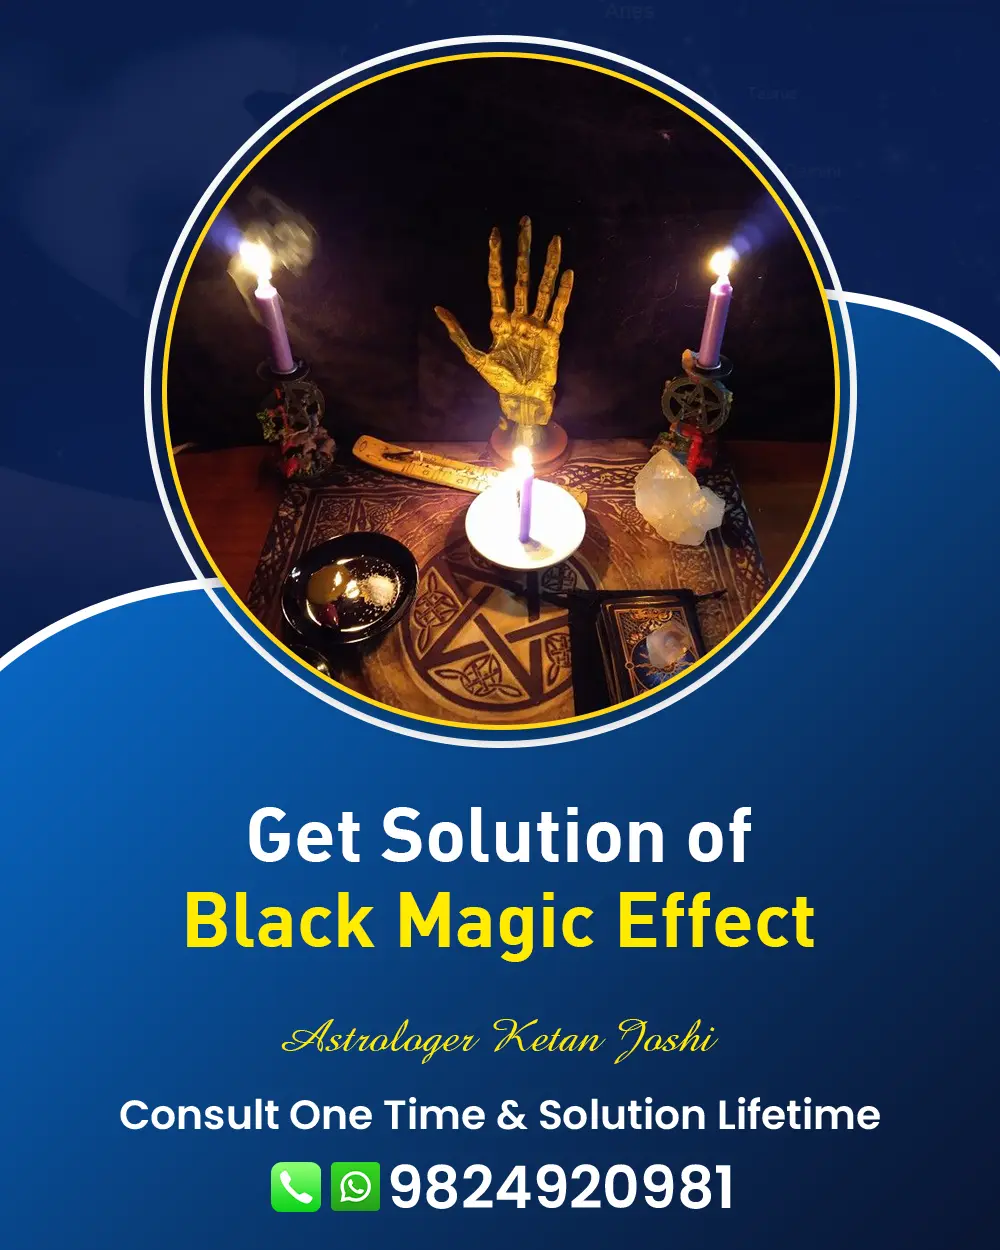 Black Magic Specialist Astrologer In Dwarka